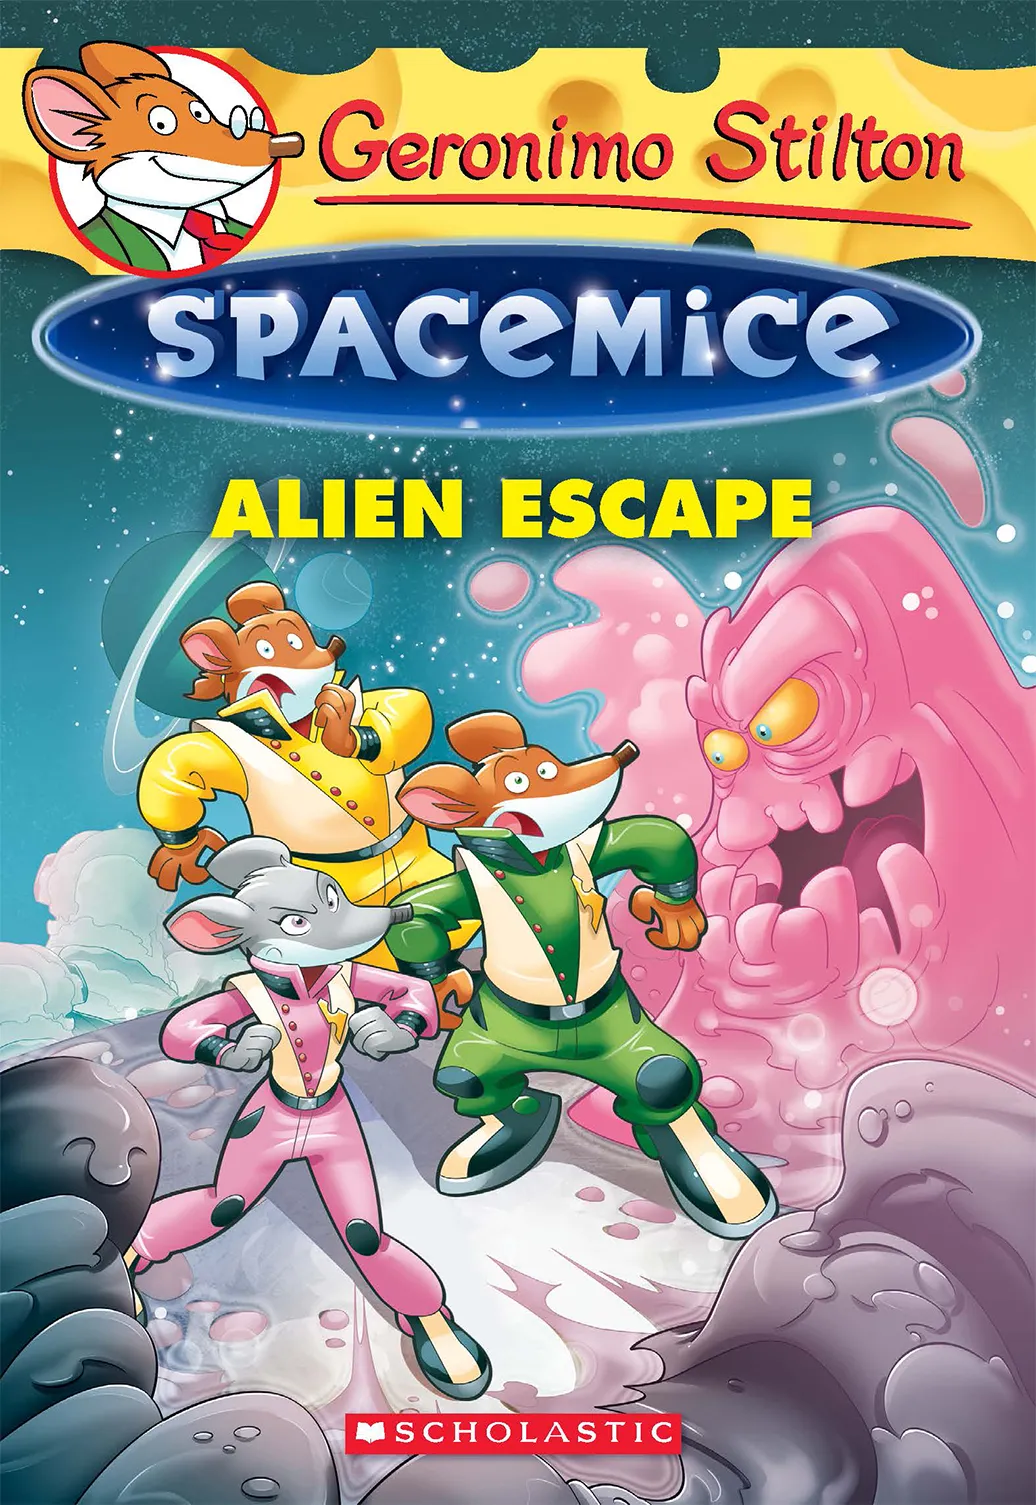 Alien Escape (Geronimo Stilton Spacemice #1)